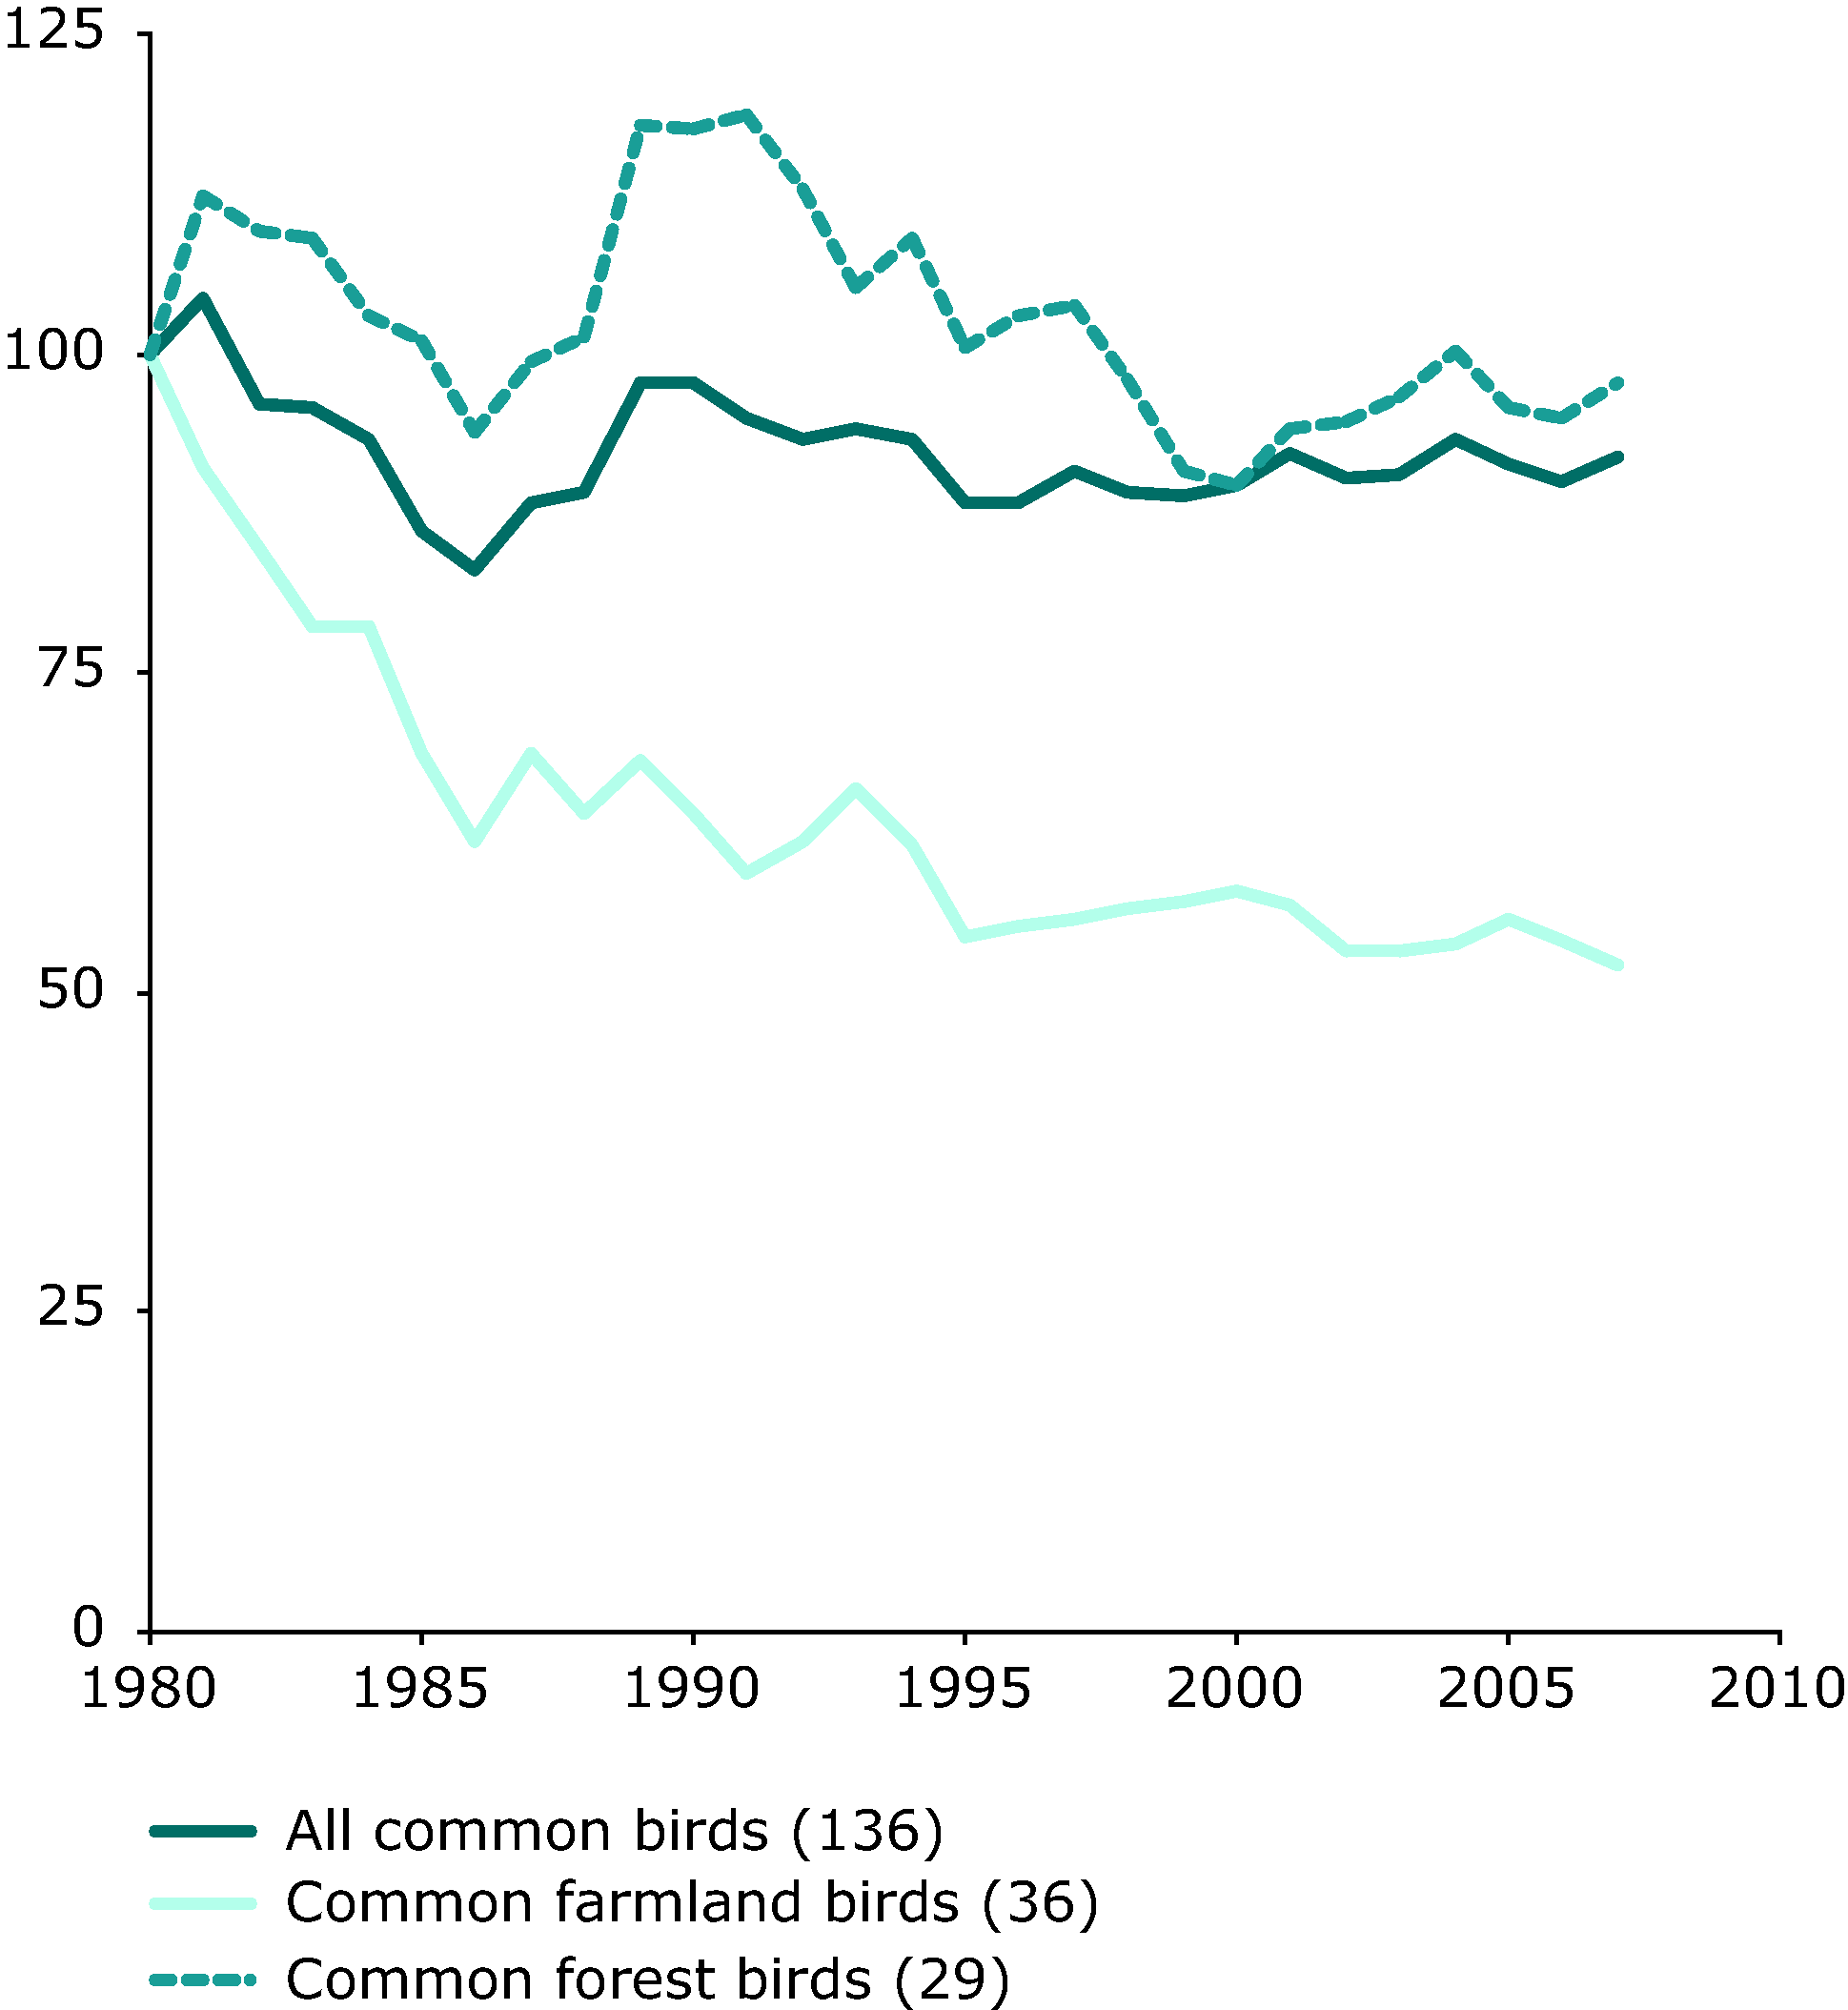 Common birds in Europe — population index (1980 = 100)